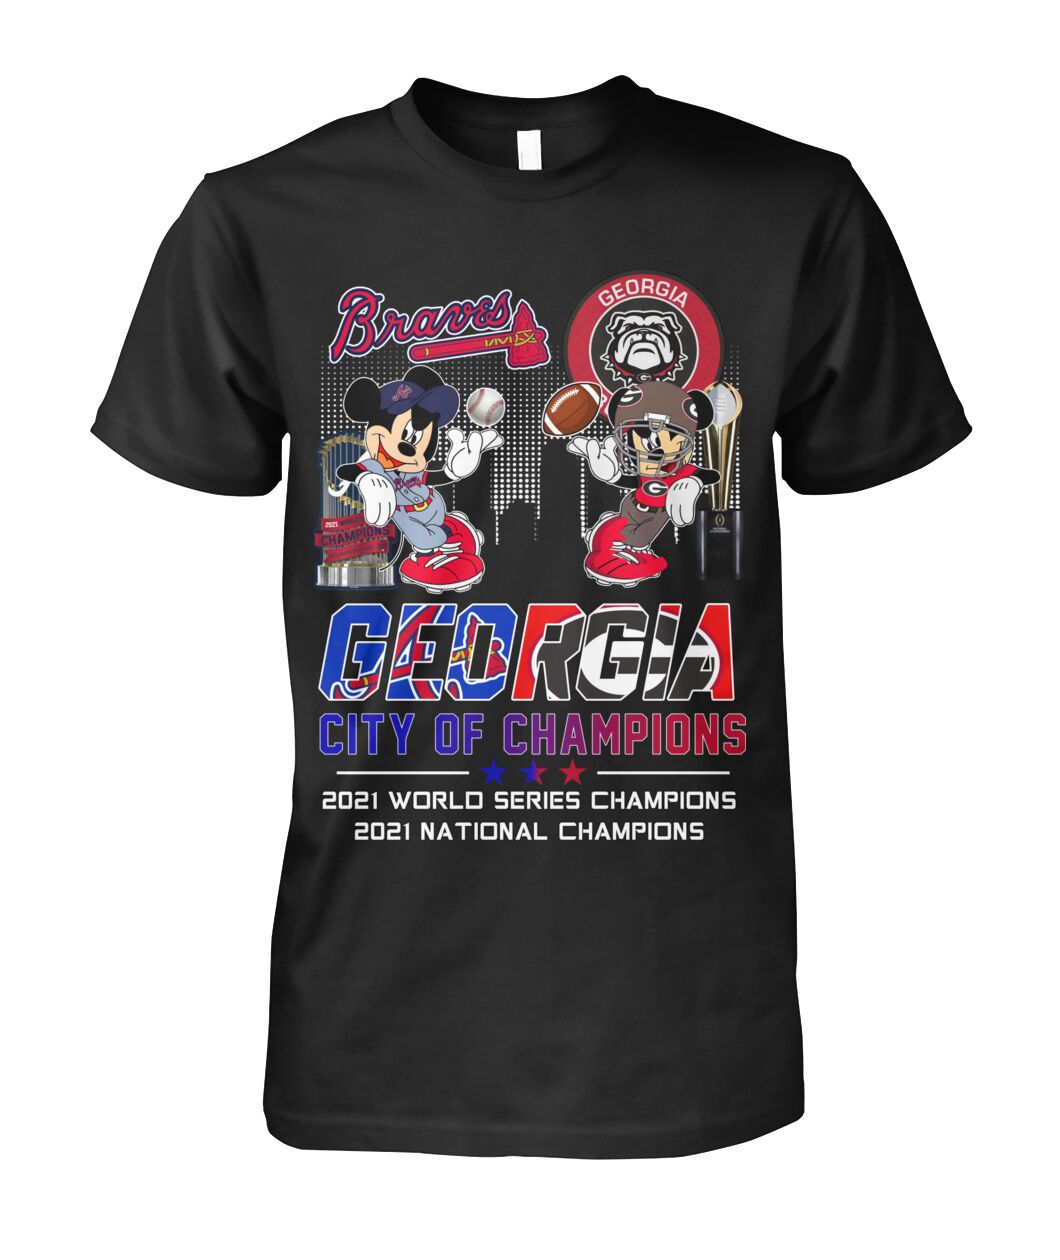 NEW Mickey Mouse Georgia Bulldogs City of Champions shirt, hoodie 27